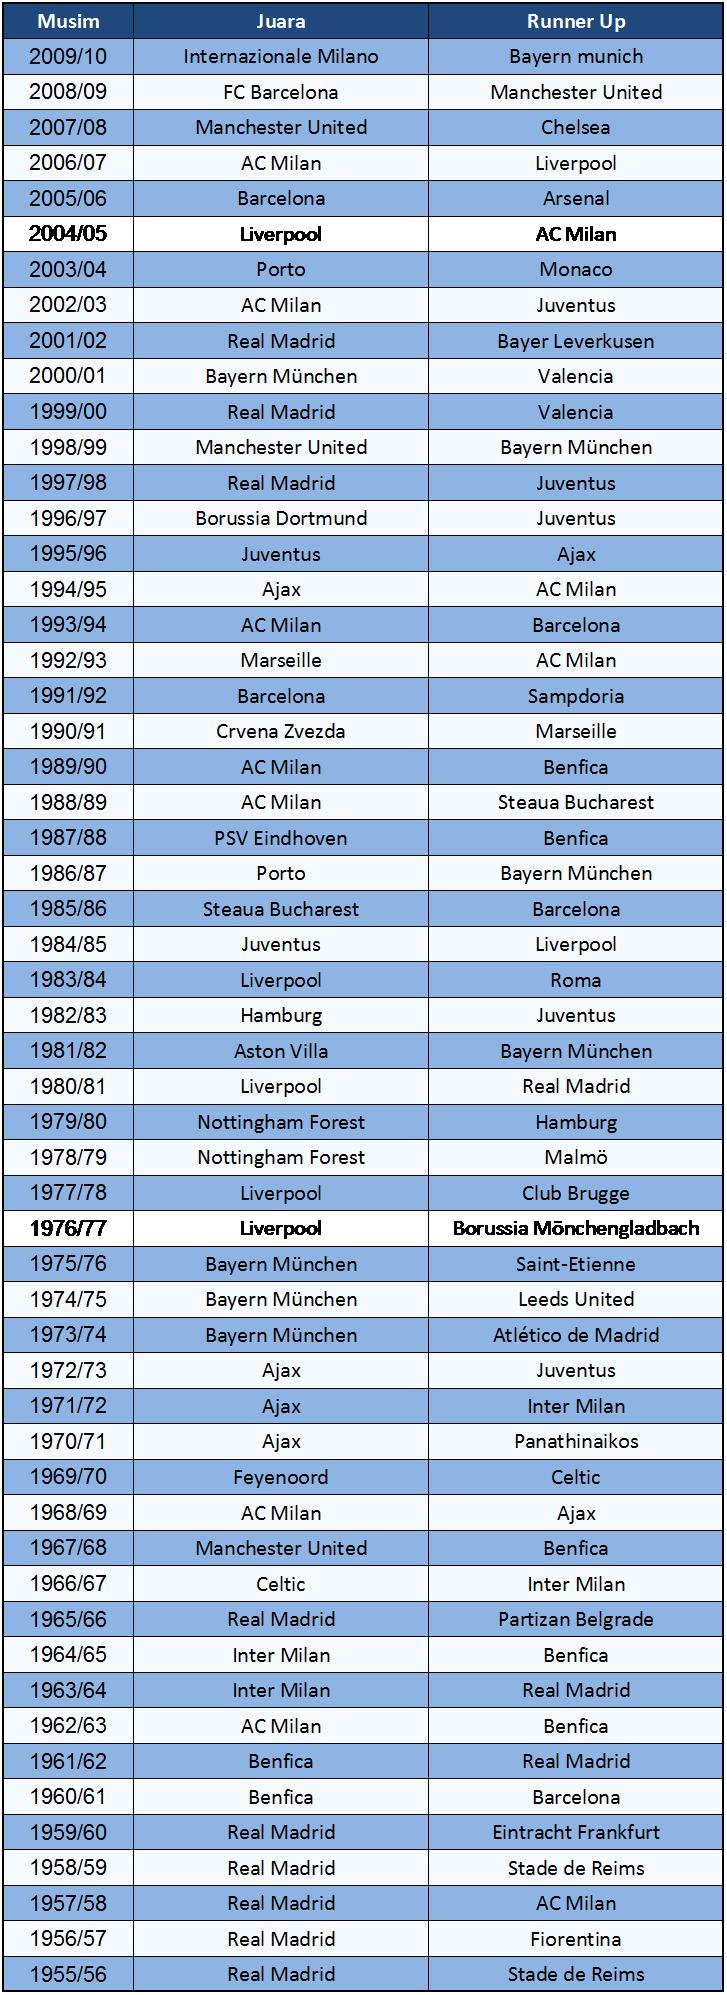 Daftar Juara UEFA Champions League 